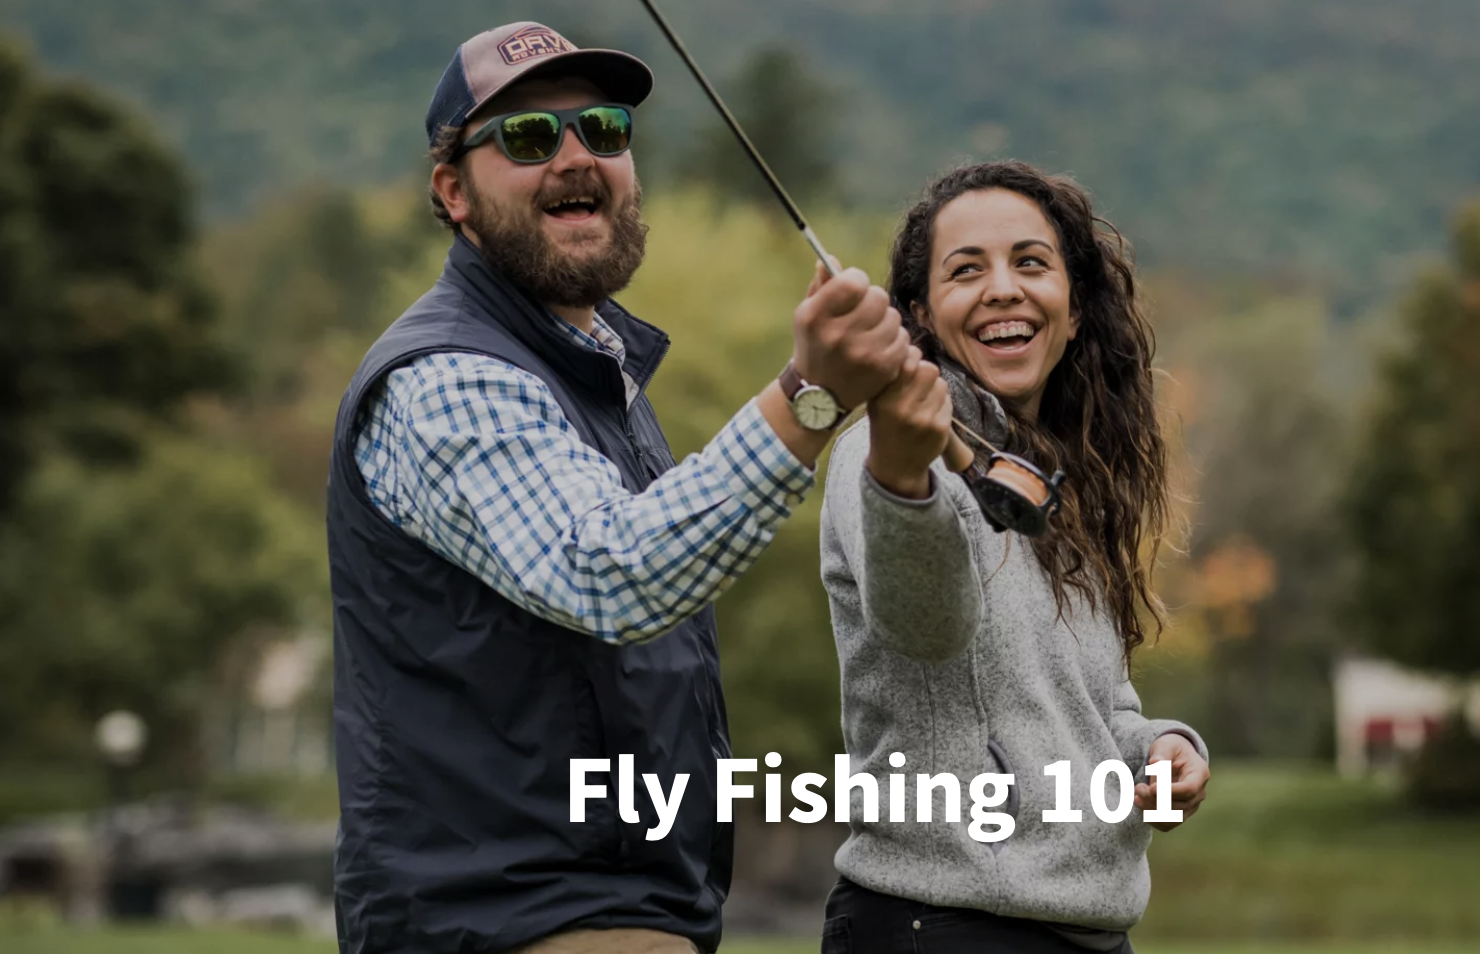 FLY FISHING 101